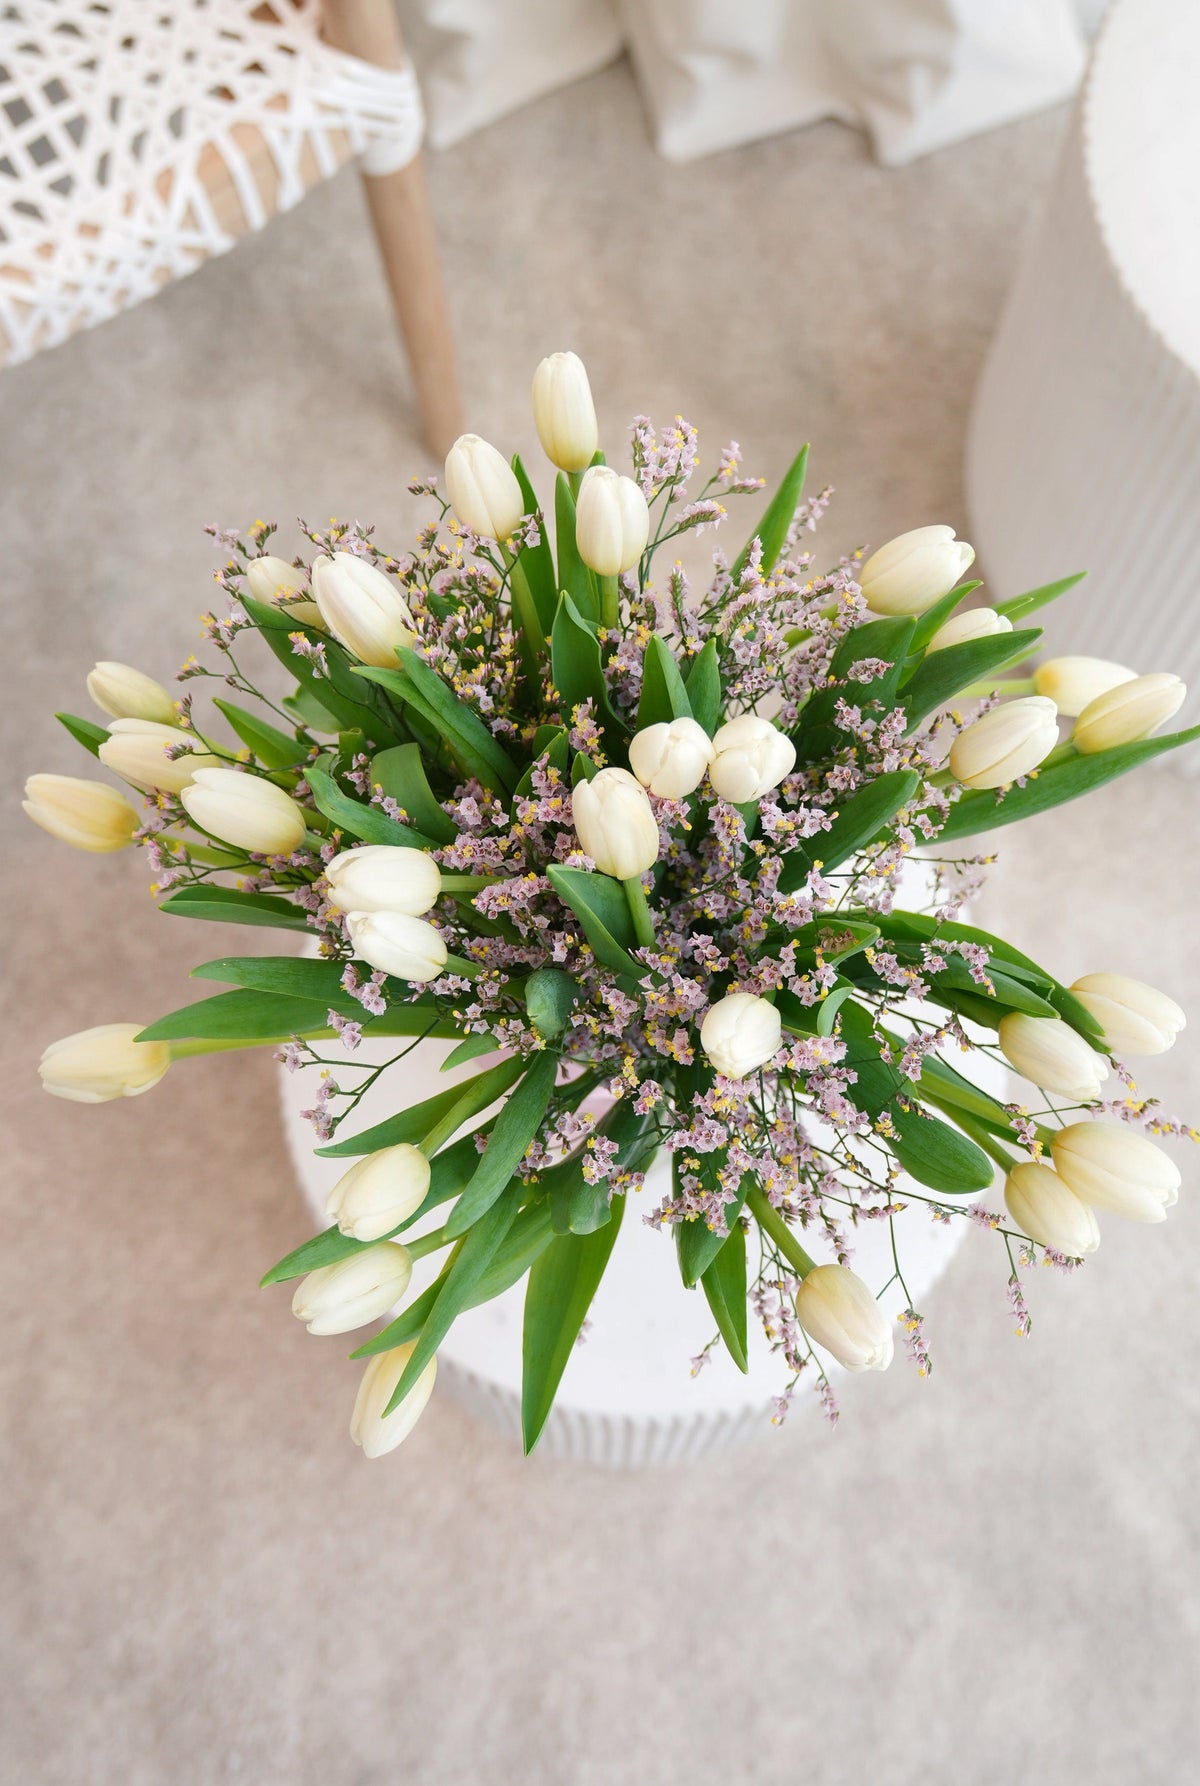 Valentine Luxury White Tulips - Vase with Heart Balloon